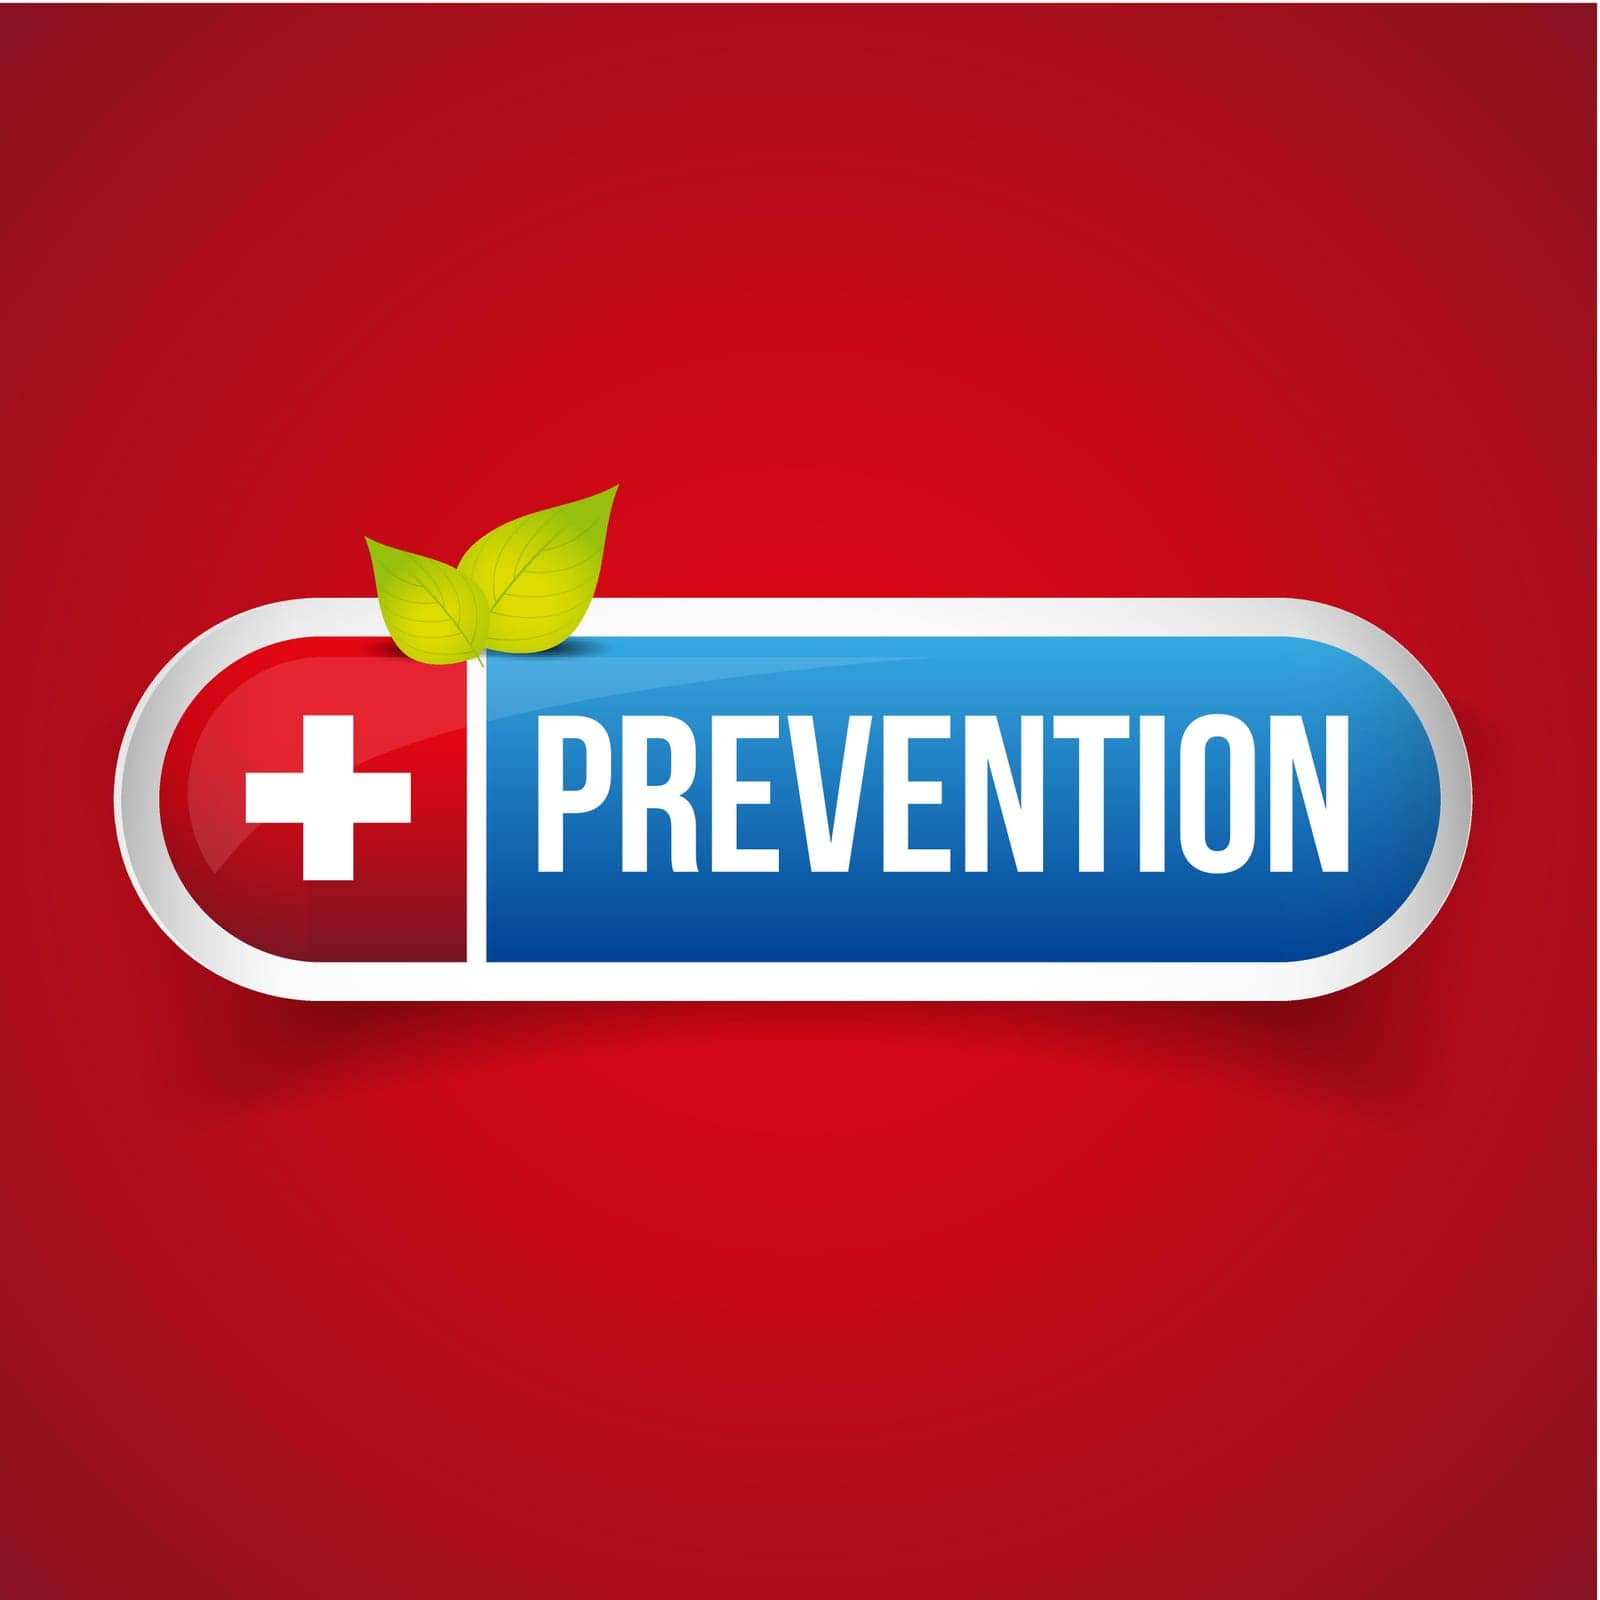 Prevention button vector icon